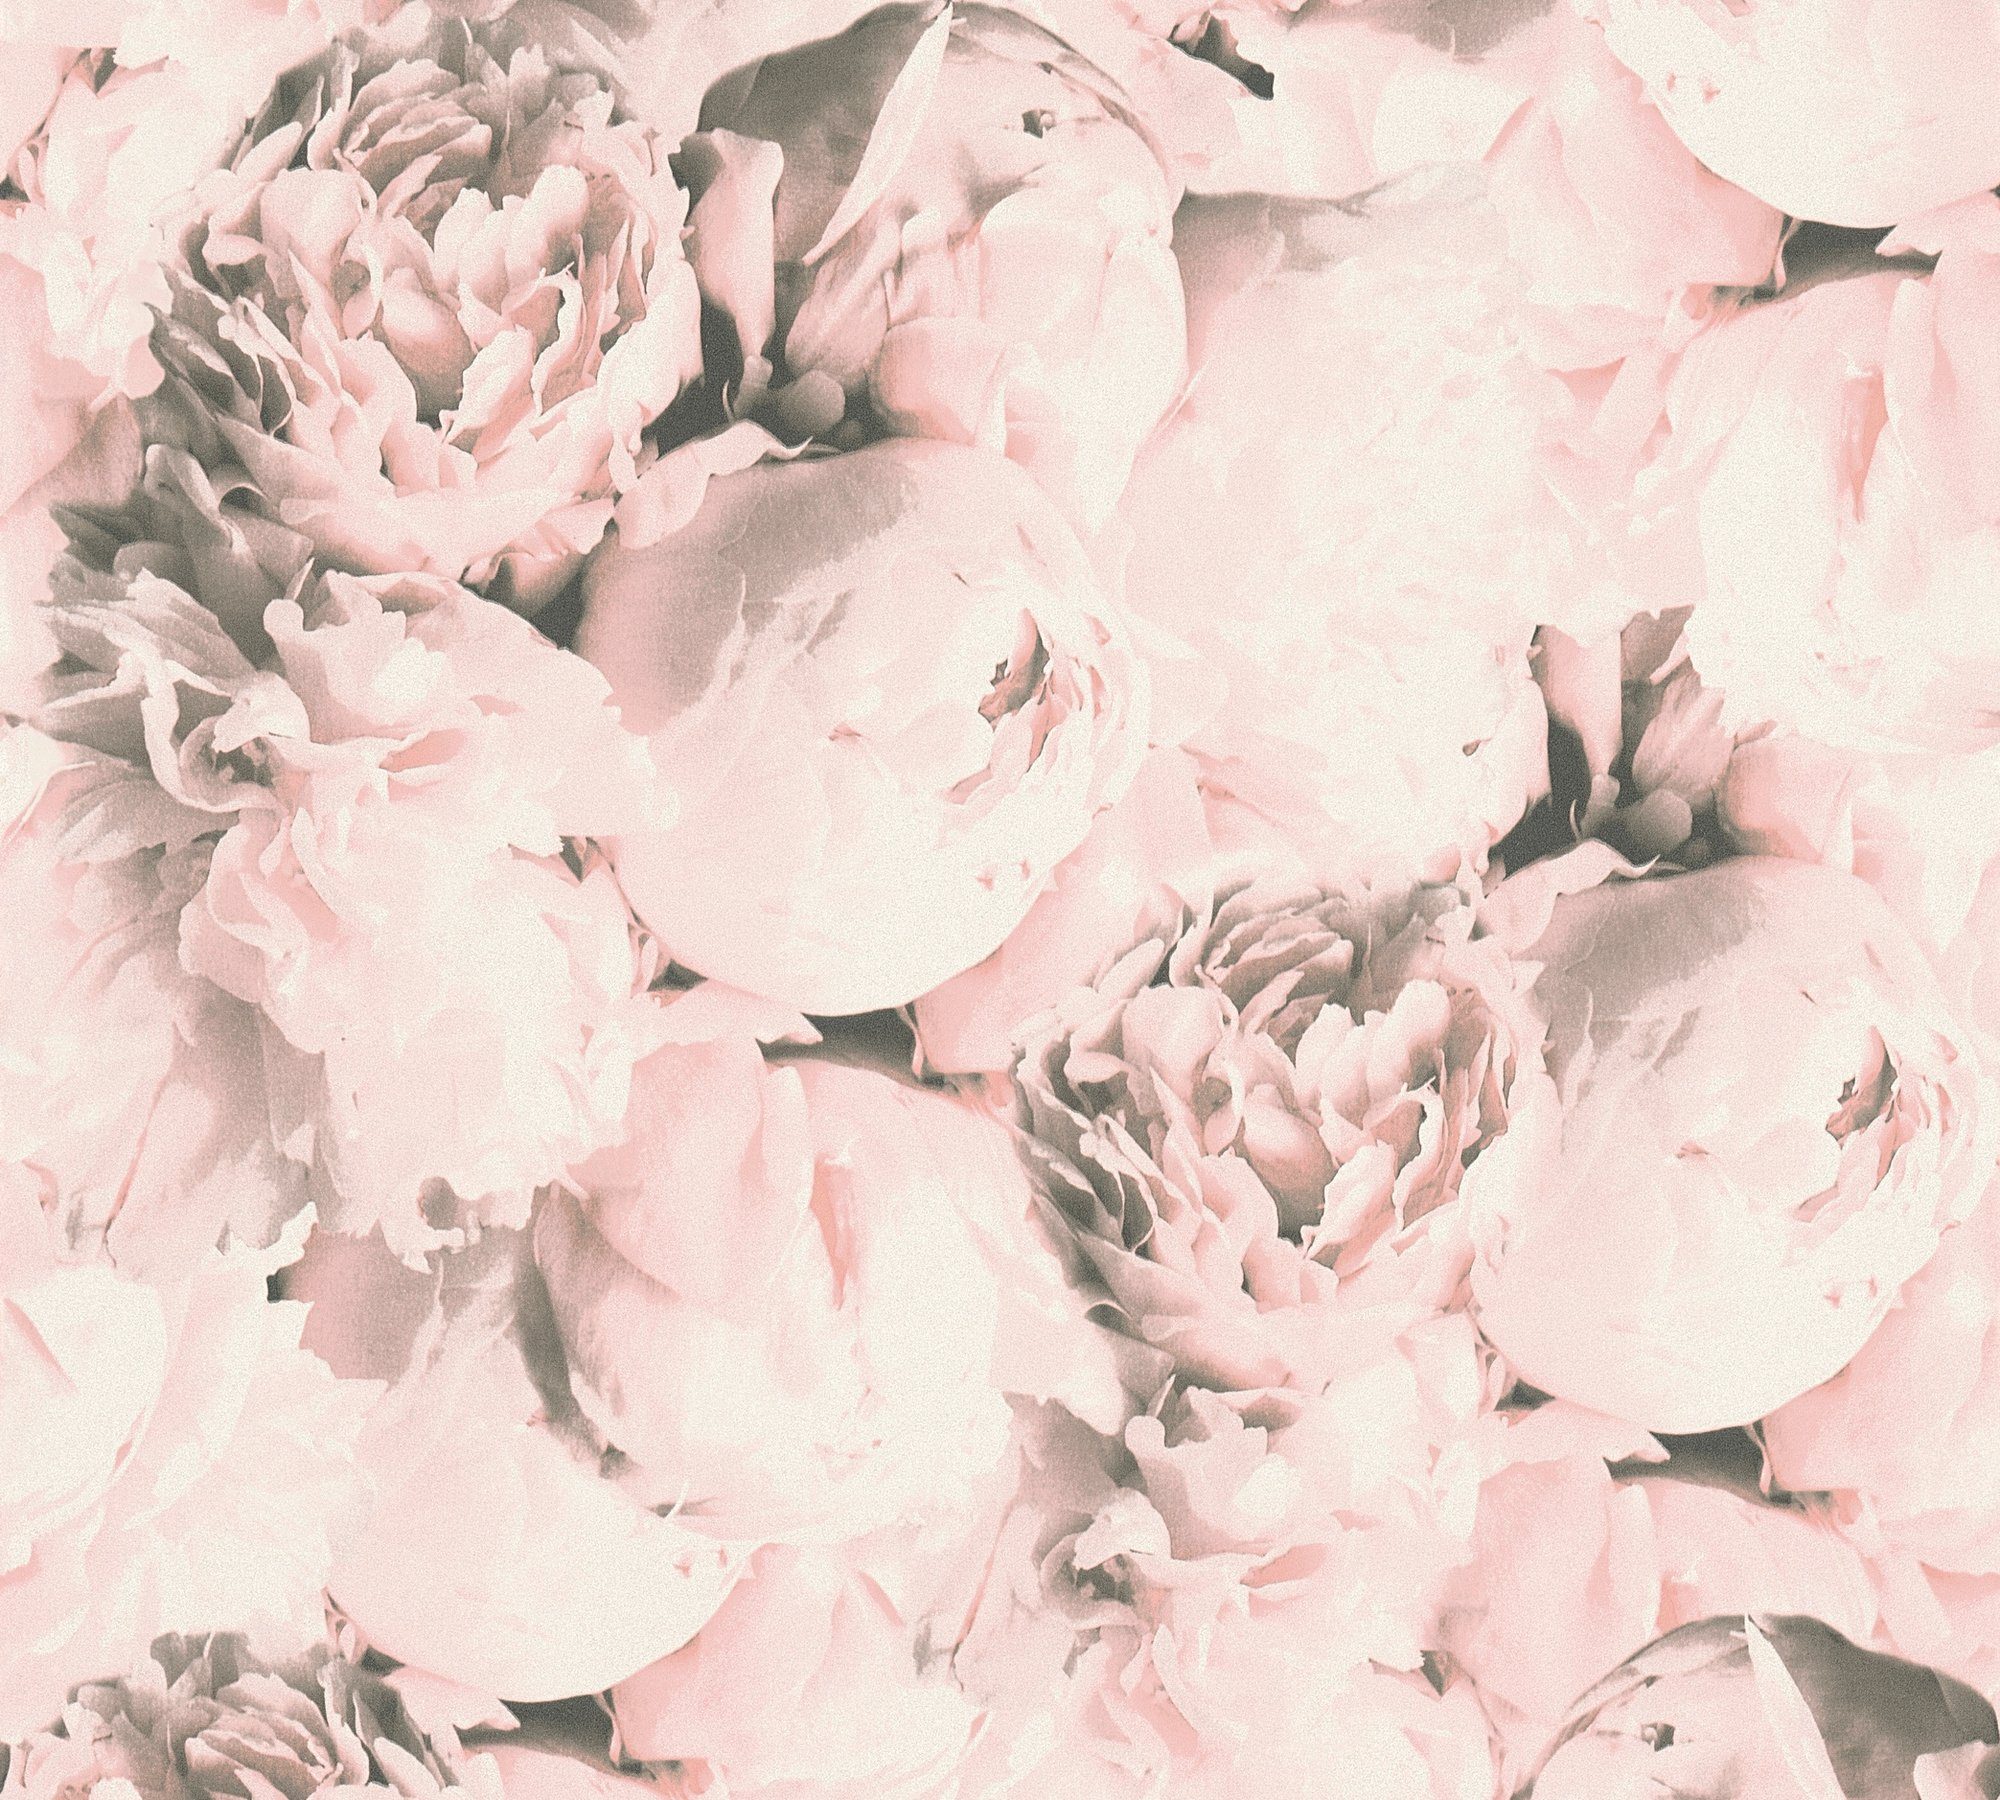 mit romantischen Rosen, Neue Flowery Floral Bude Romantic 2.0 Vliestapete grau/hellrosa A.S. Blumen Tapete floral, Création